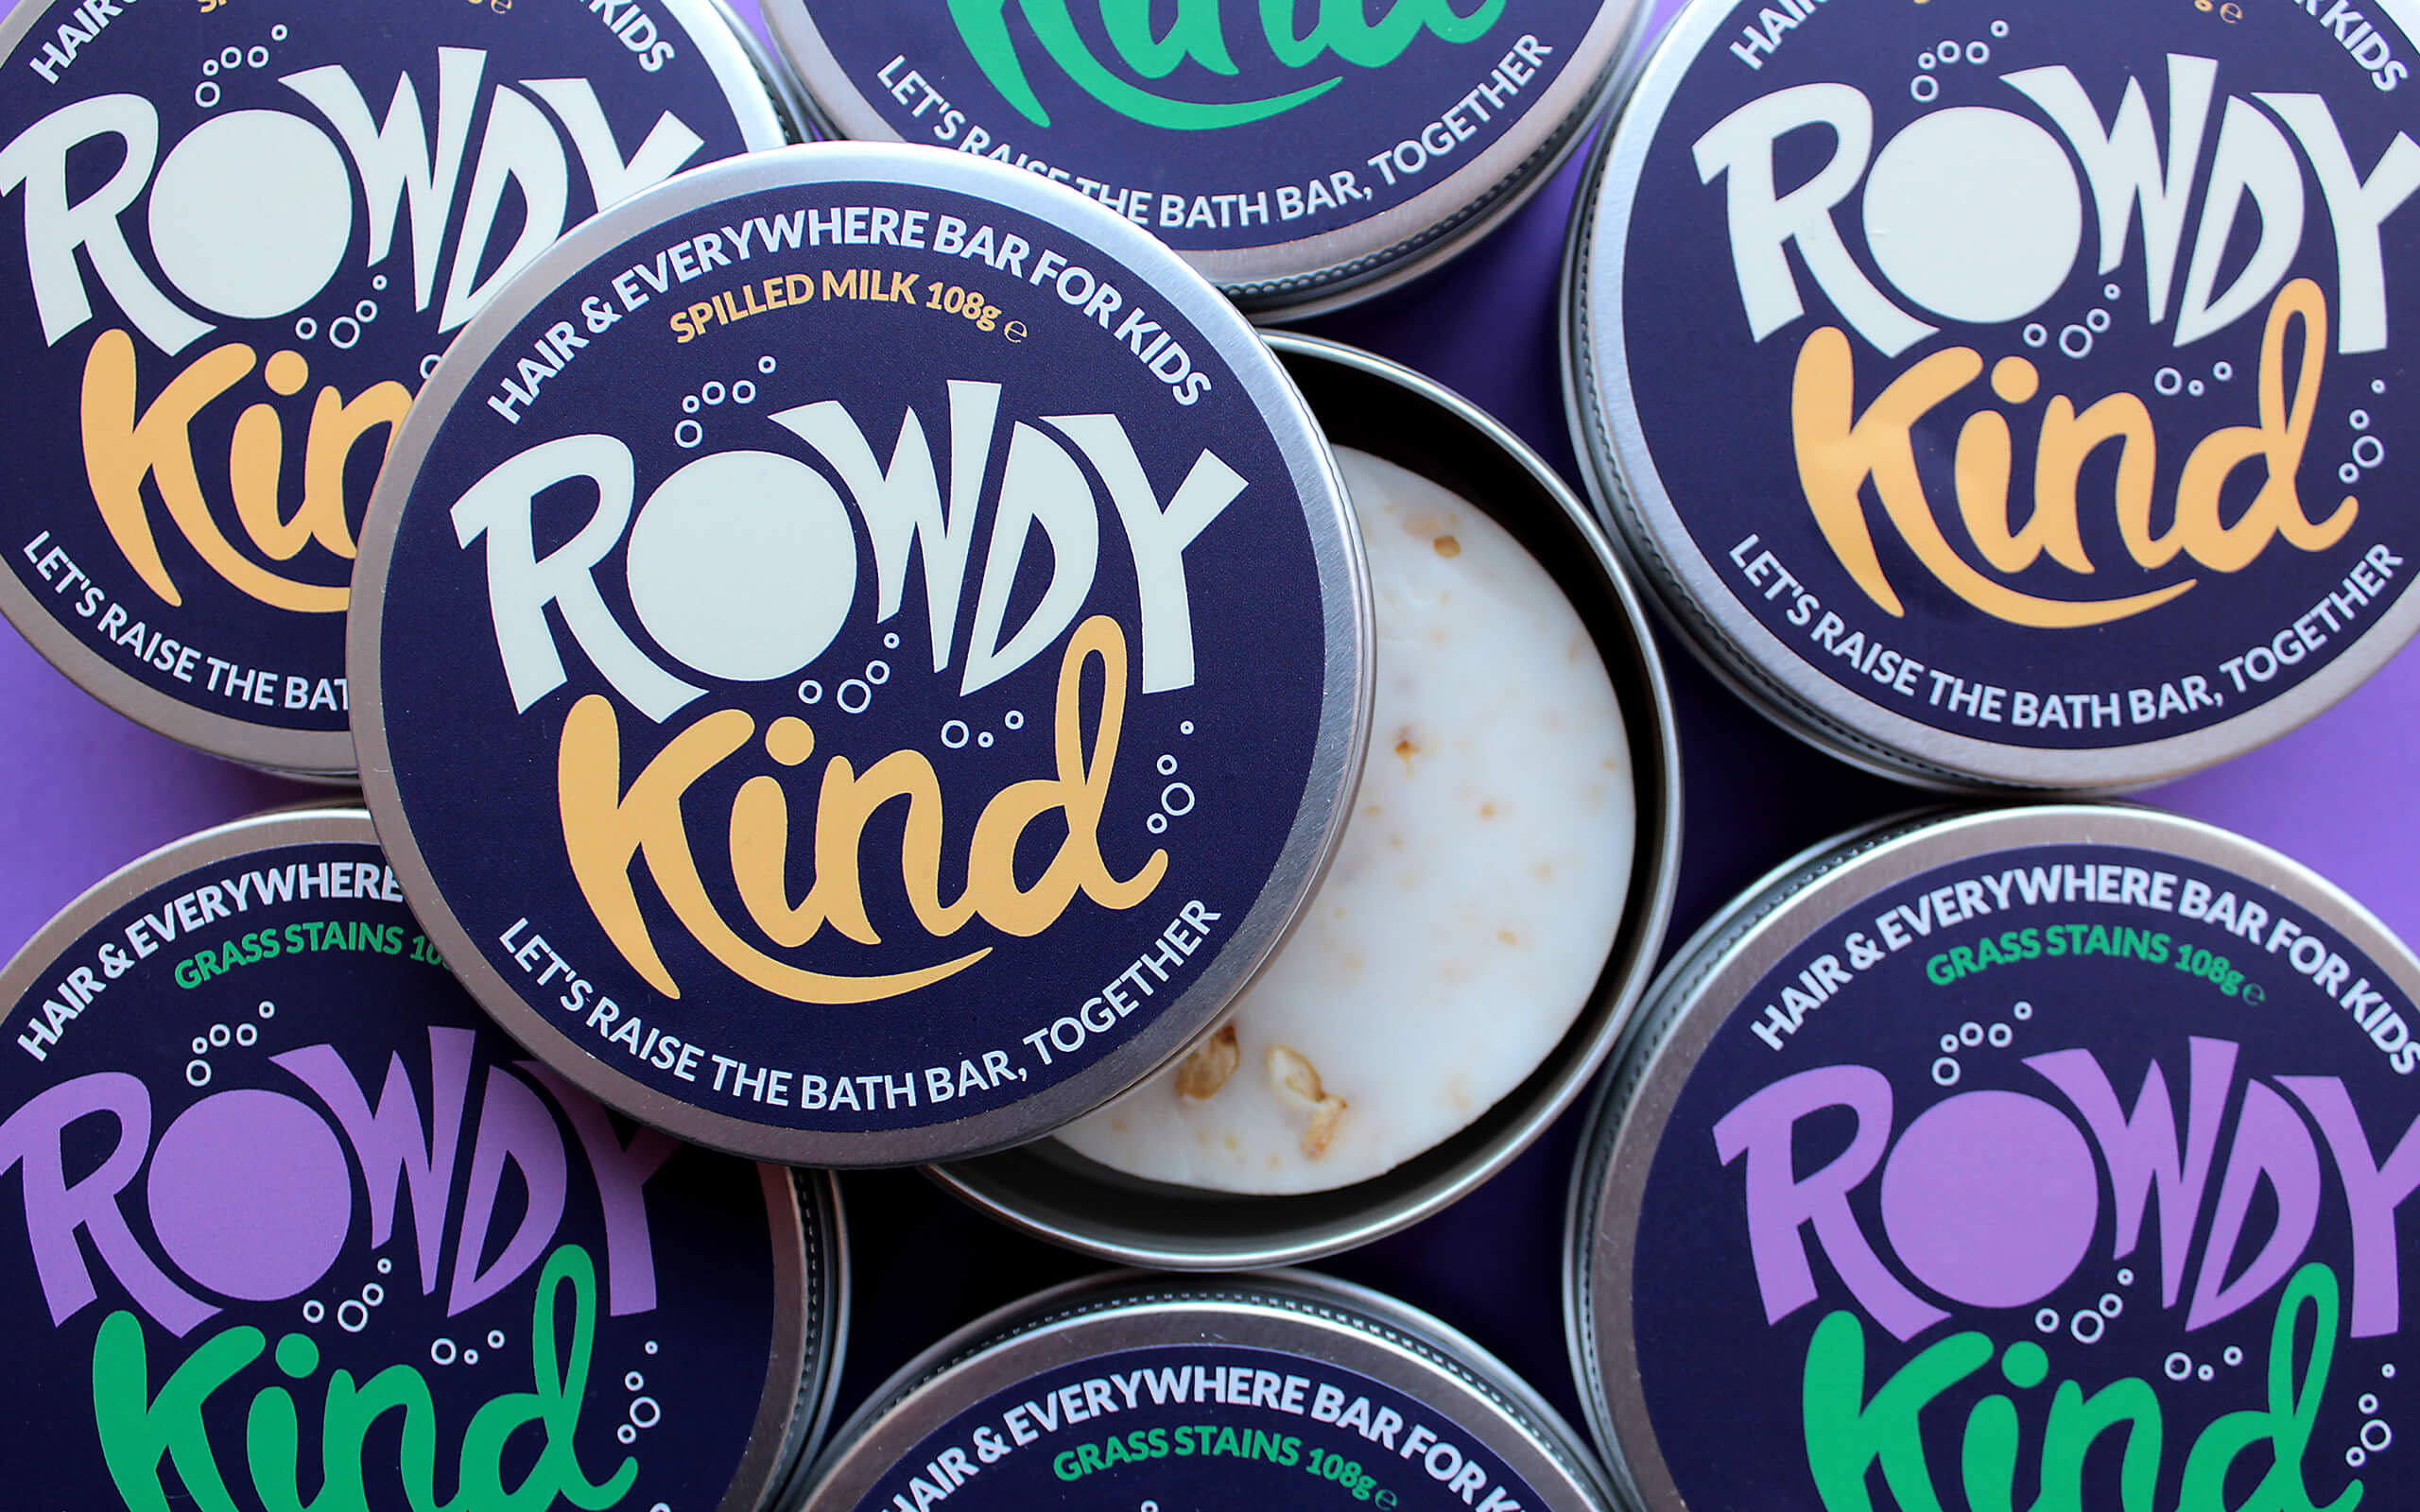 Taller Design Agency Rowdy Kind packaging group tin soap bar